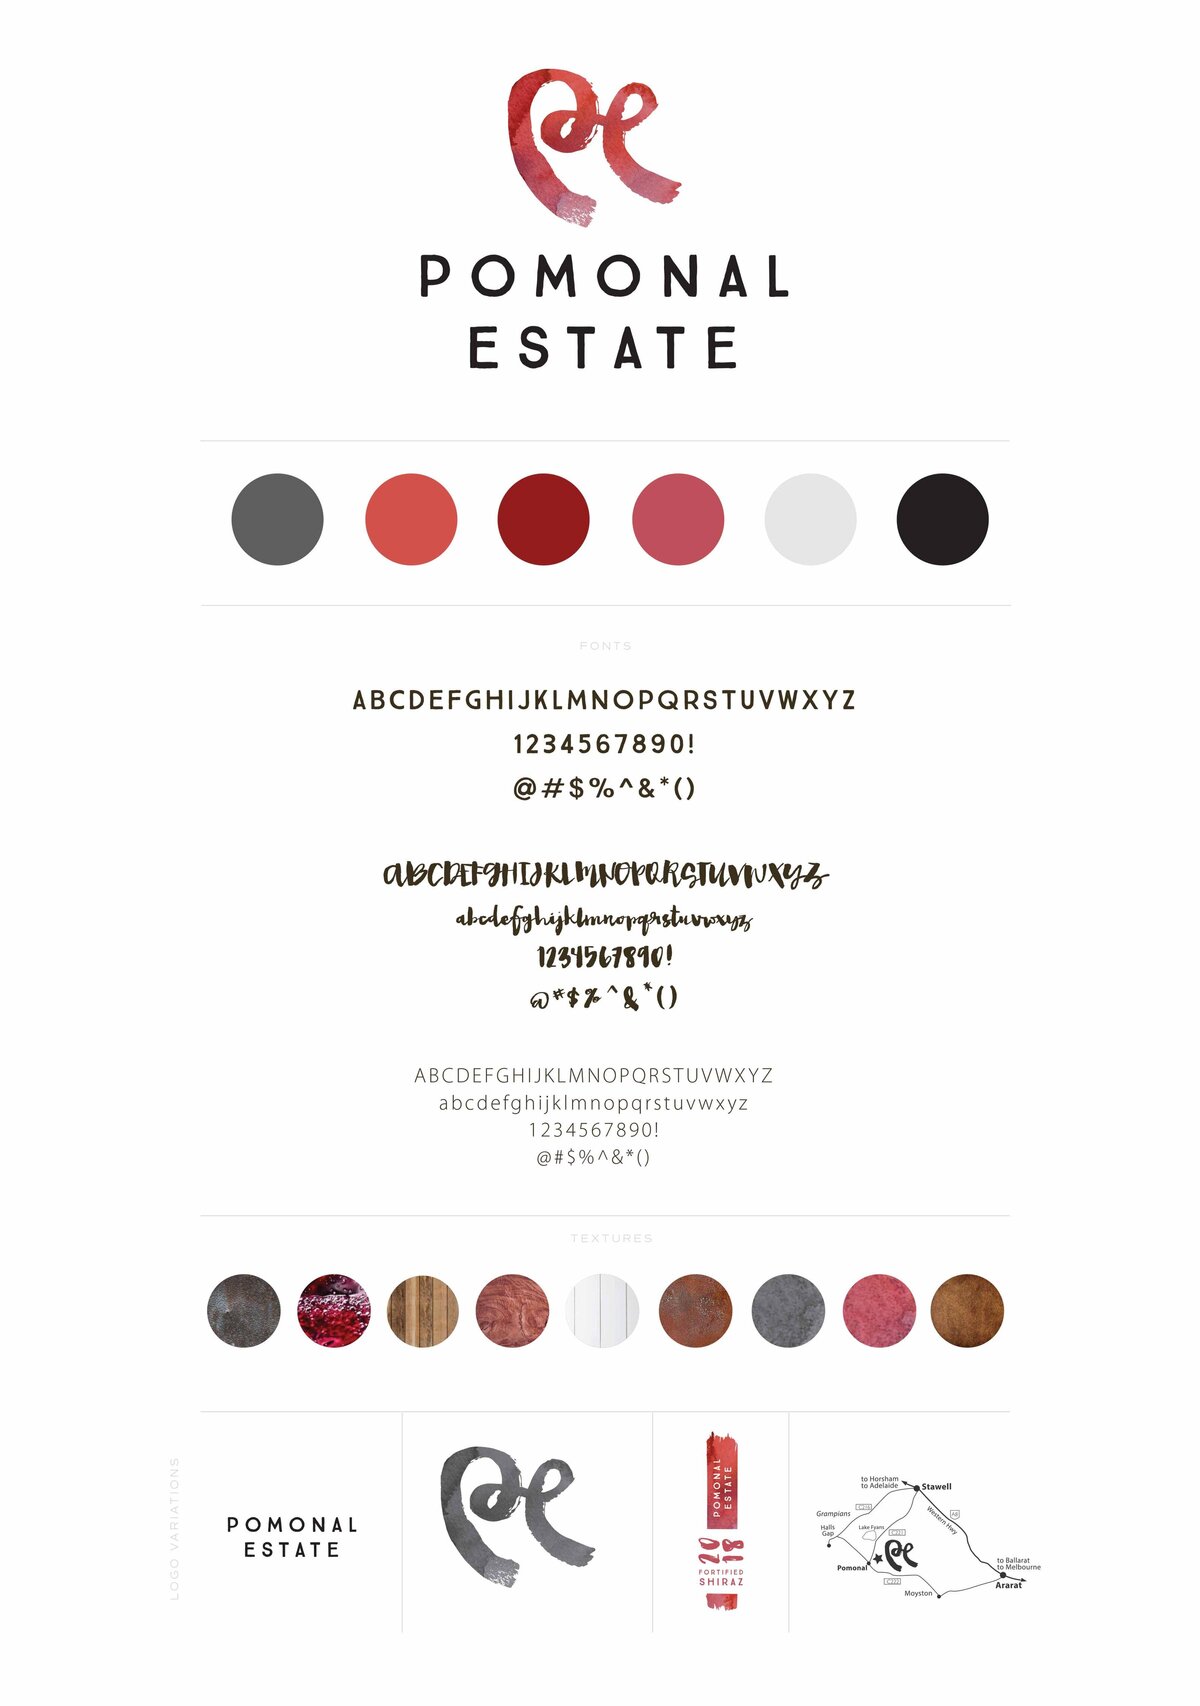 pomonal-estate-brandboard1